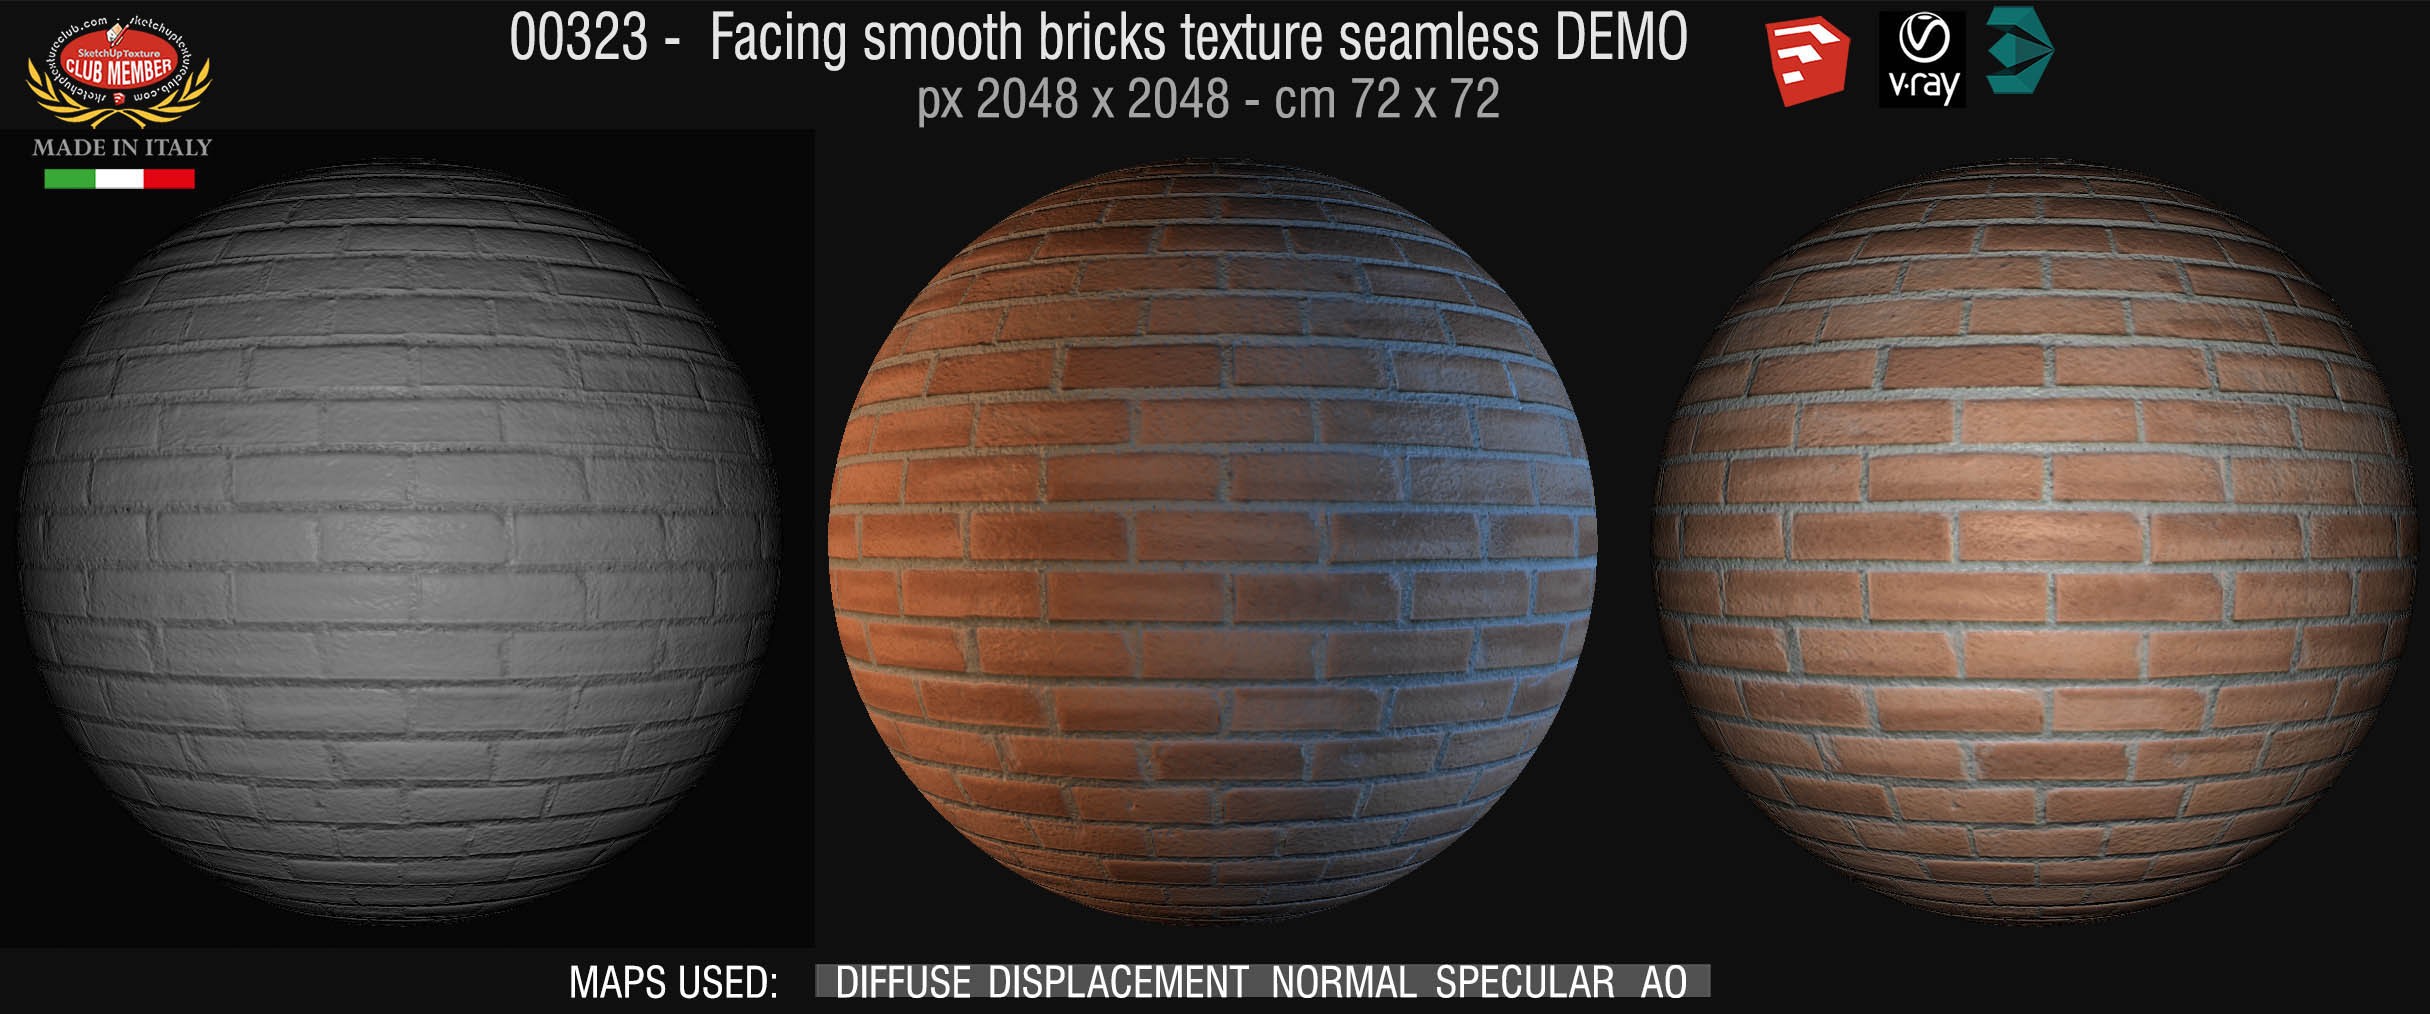 00323 Facing smooth bricks texture seamless + maps DEMO